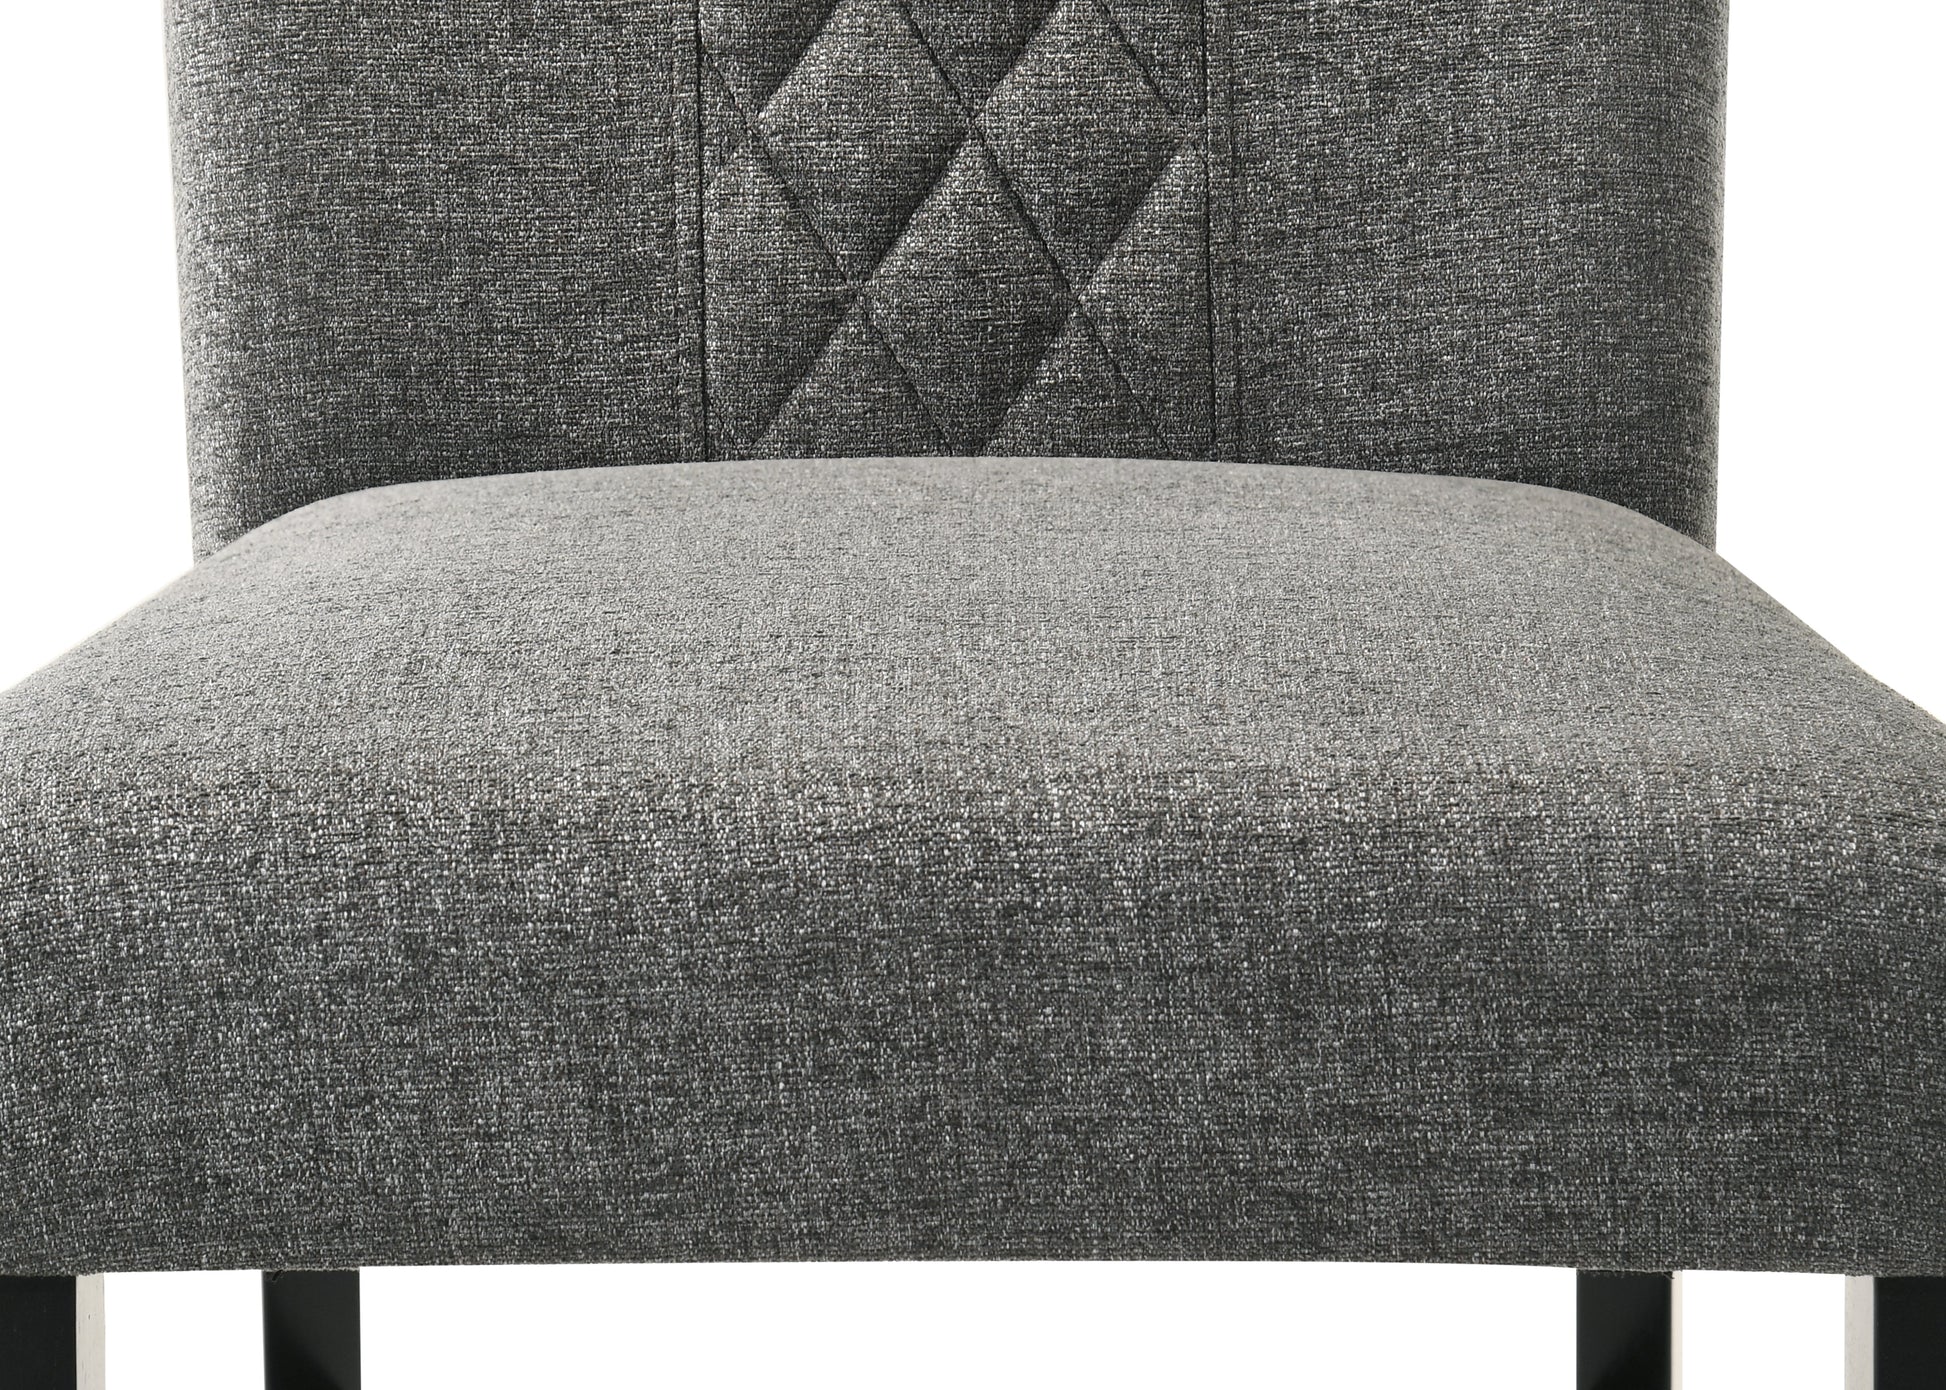 Arlene Gray Traditional Fabric Modern Wood Rectangular Dining Room Set